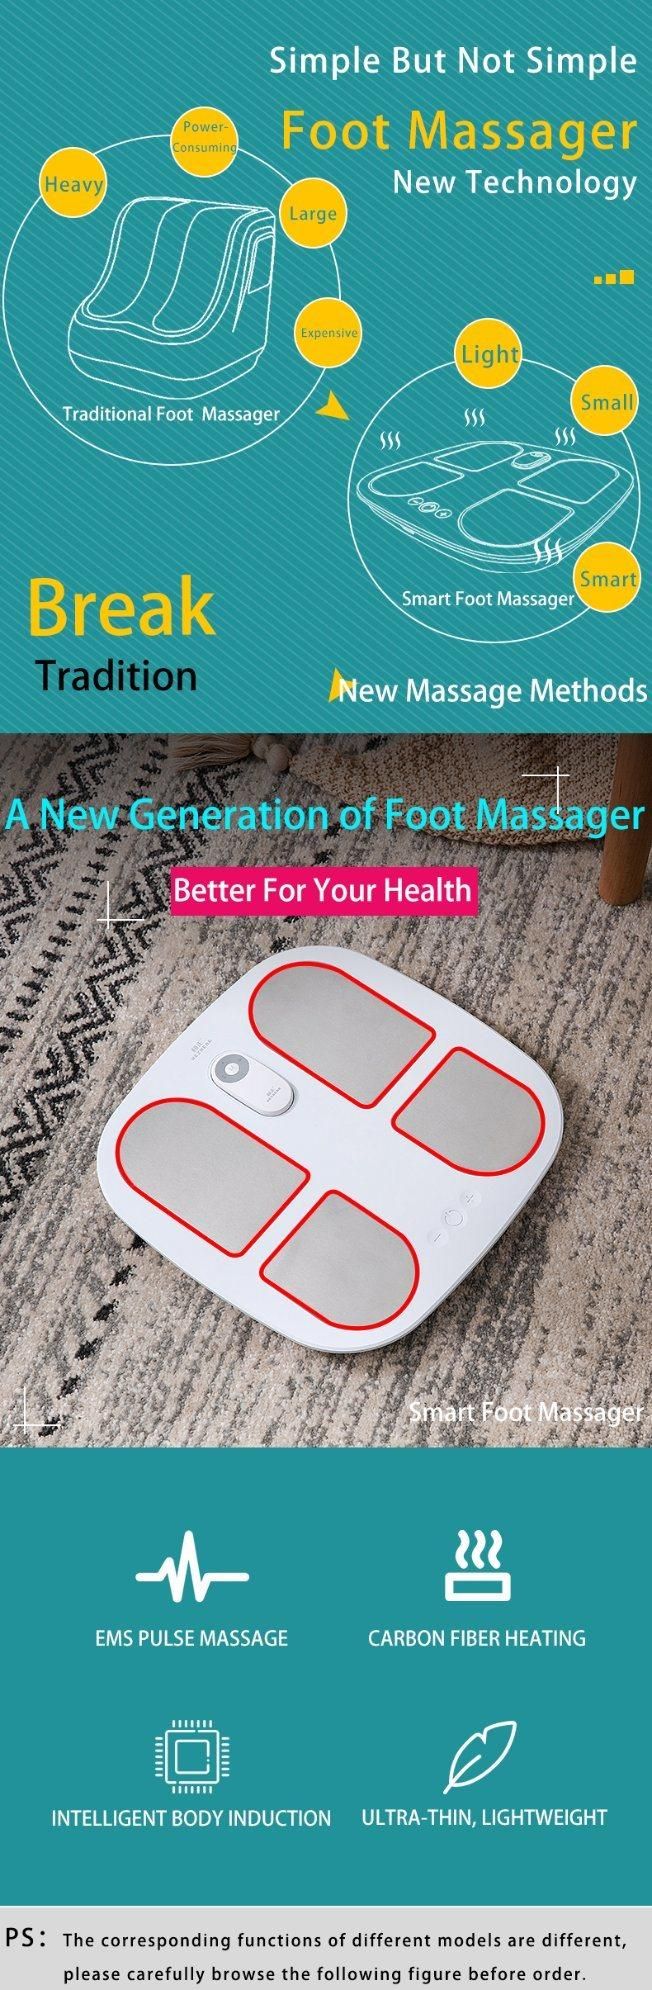 Hezheng Newest High Quality Comfortable Electronic Shiatsu Foot Massager Product